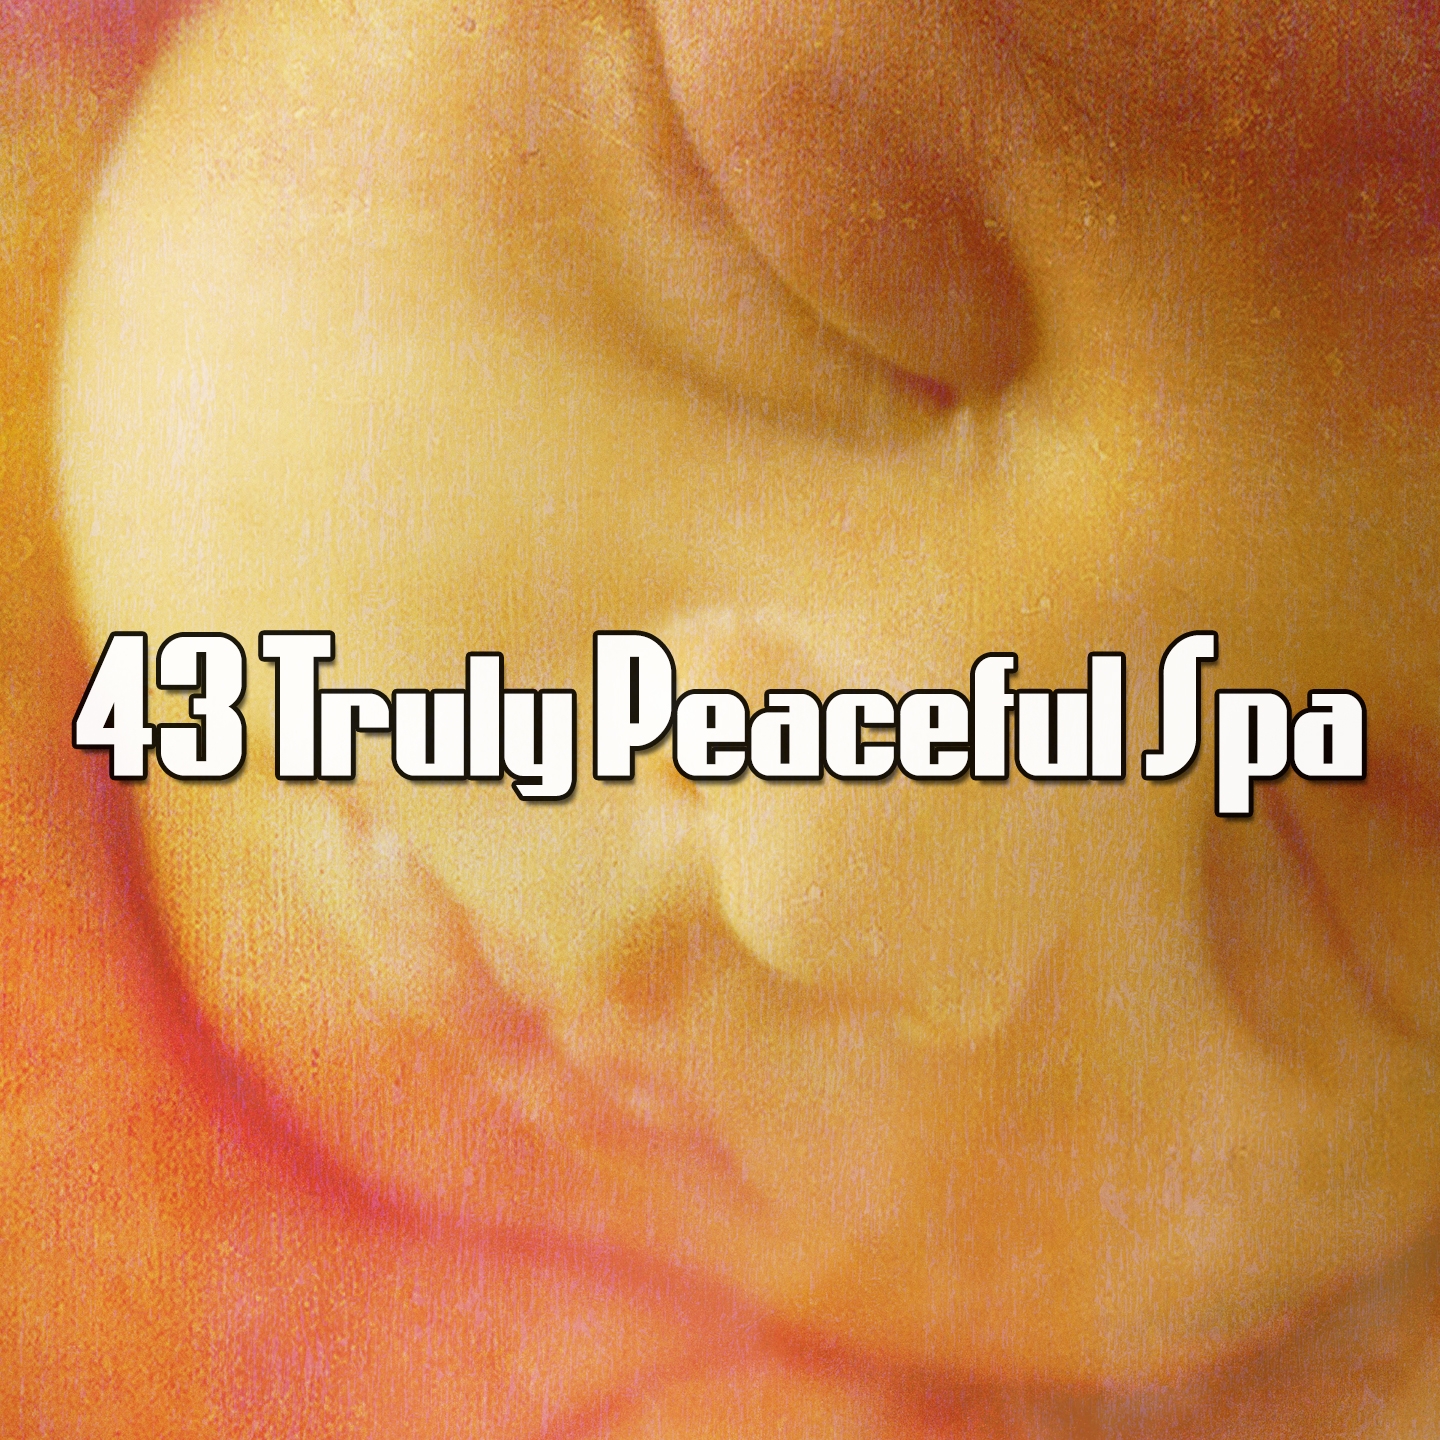 43 Truly Peaceful Spa